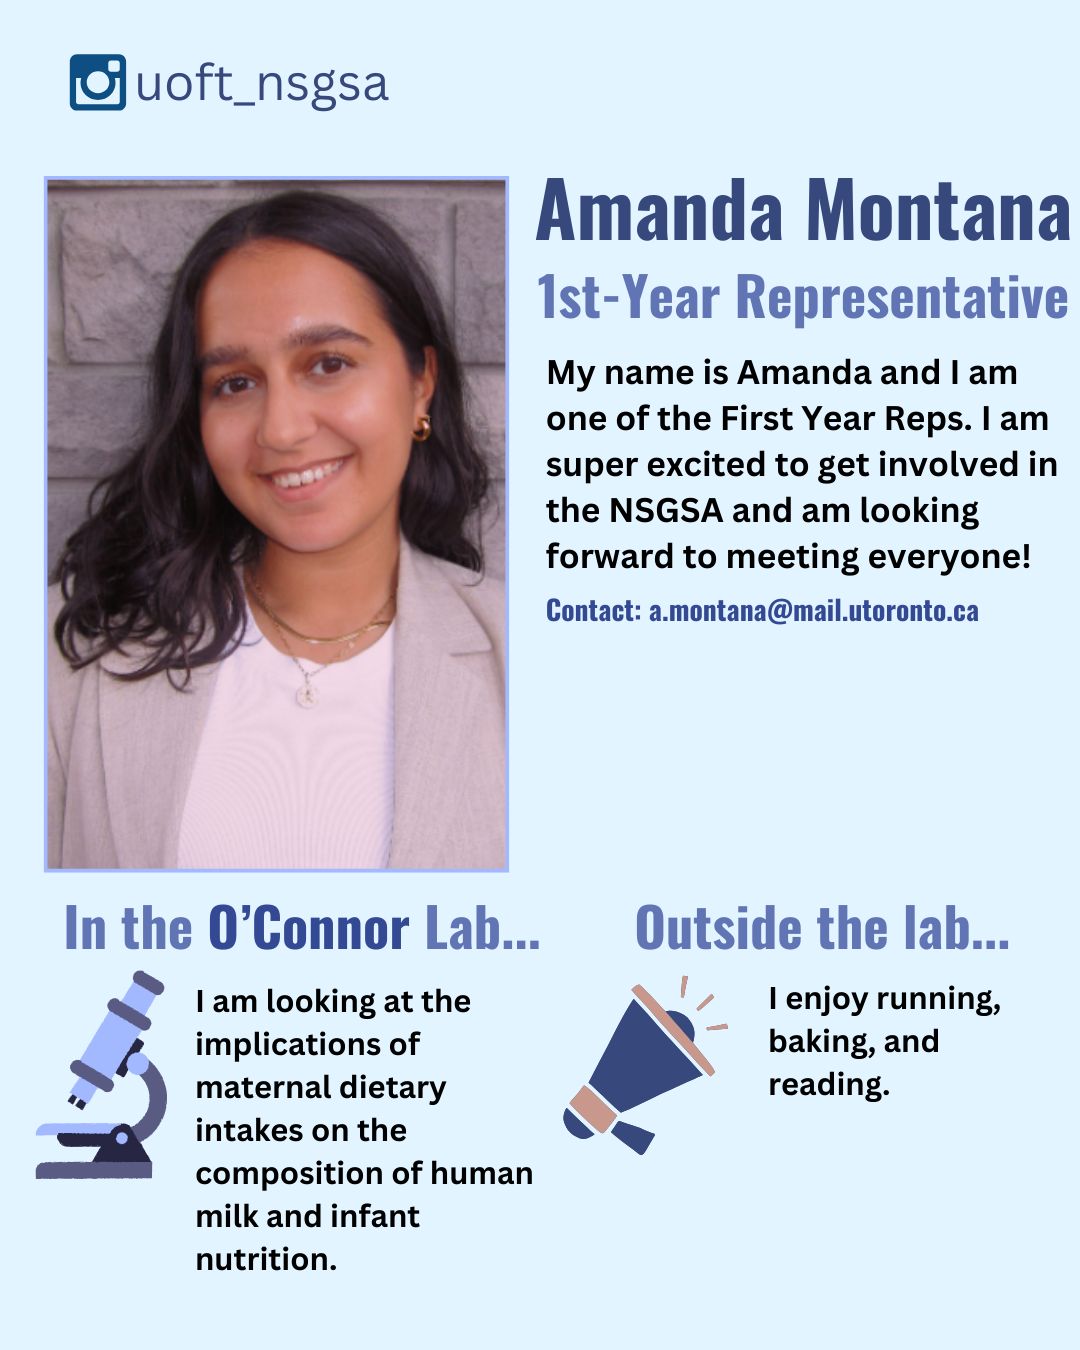 Amanda Montana, 1st Year Representative